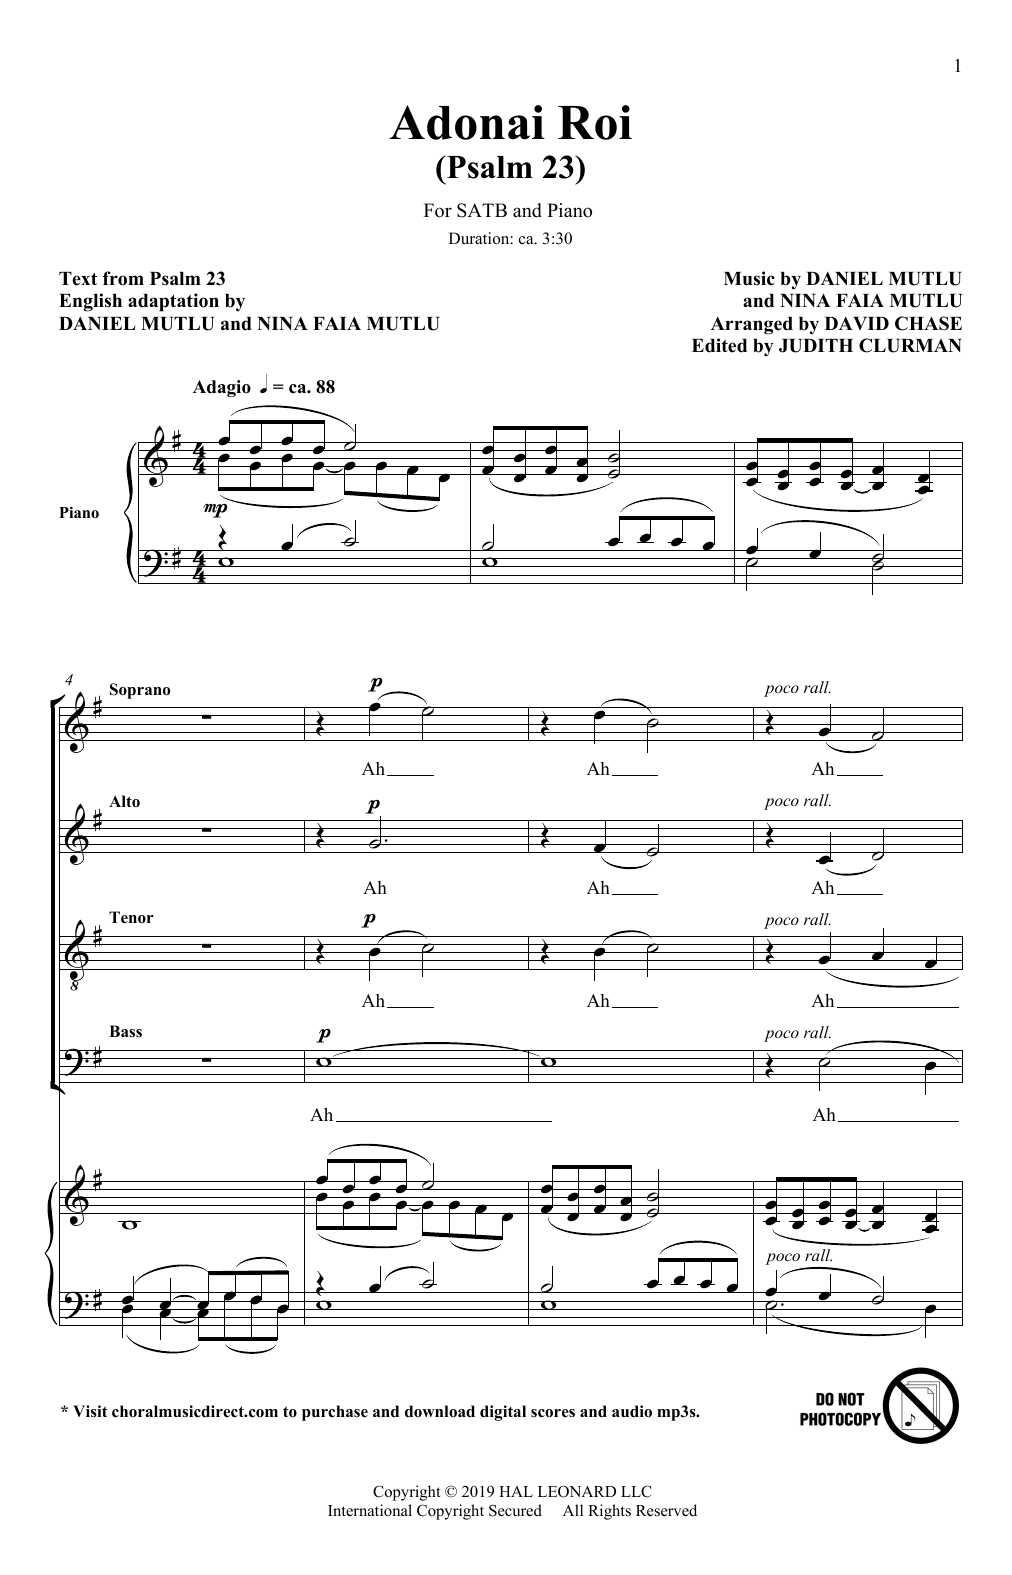 Nina Faia Mutlu and Daniel Mutlu Adonai Roi (Psalm 23) (Rejoice: Honoring the Jewish Spirit) (arr. David Chase) sheet music notes and chords arranged for SATB Choir